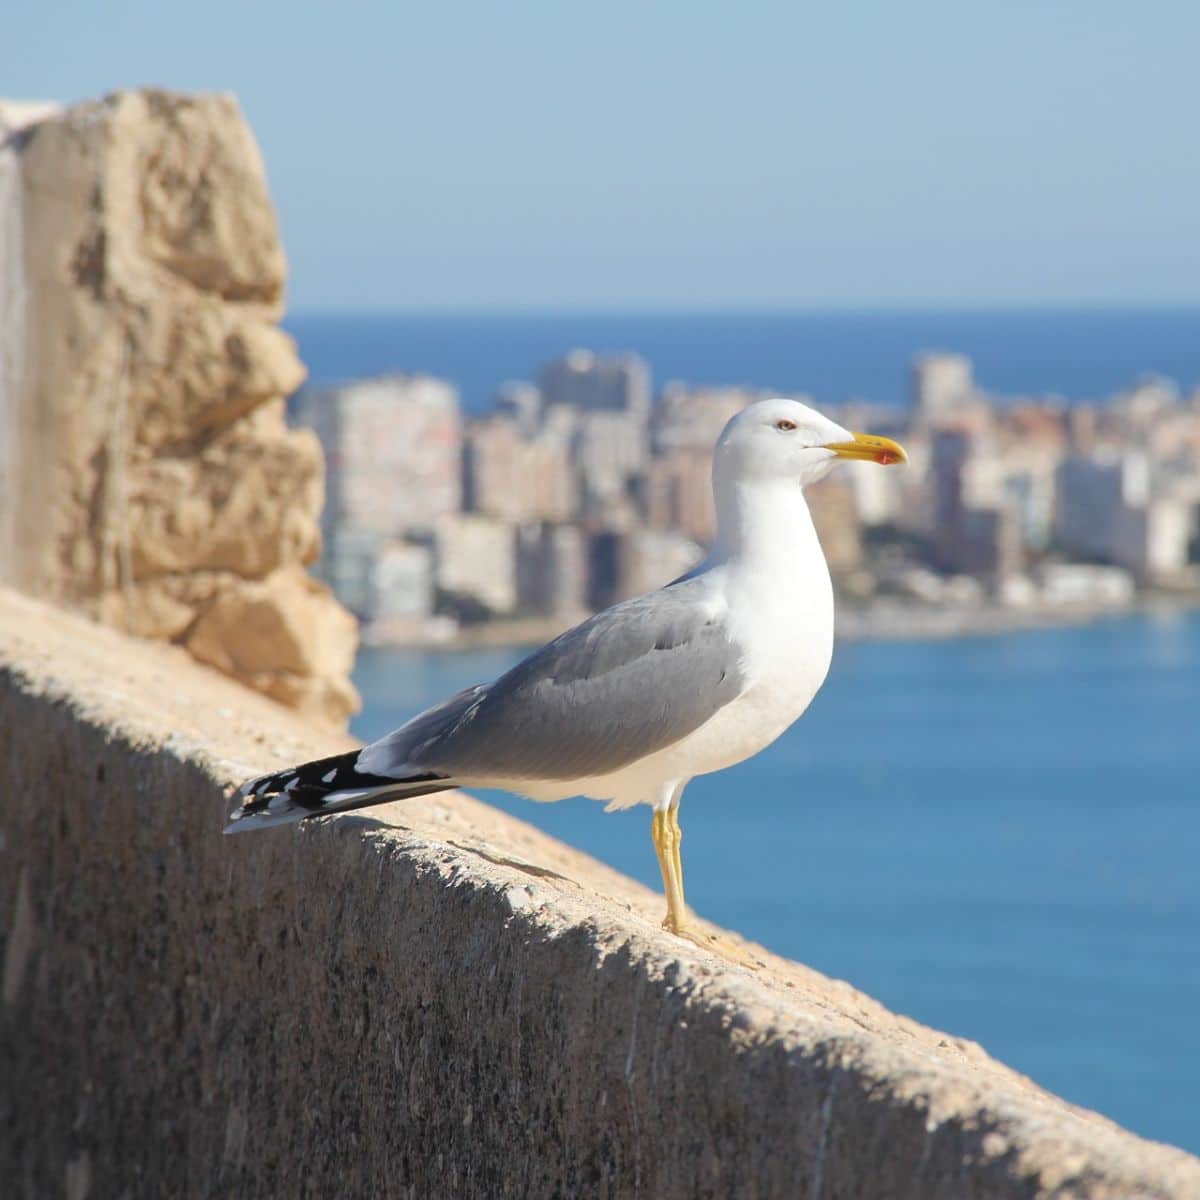 what do seagulls represent spiritually